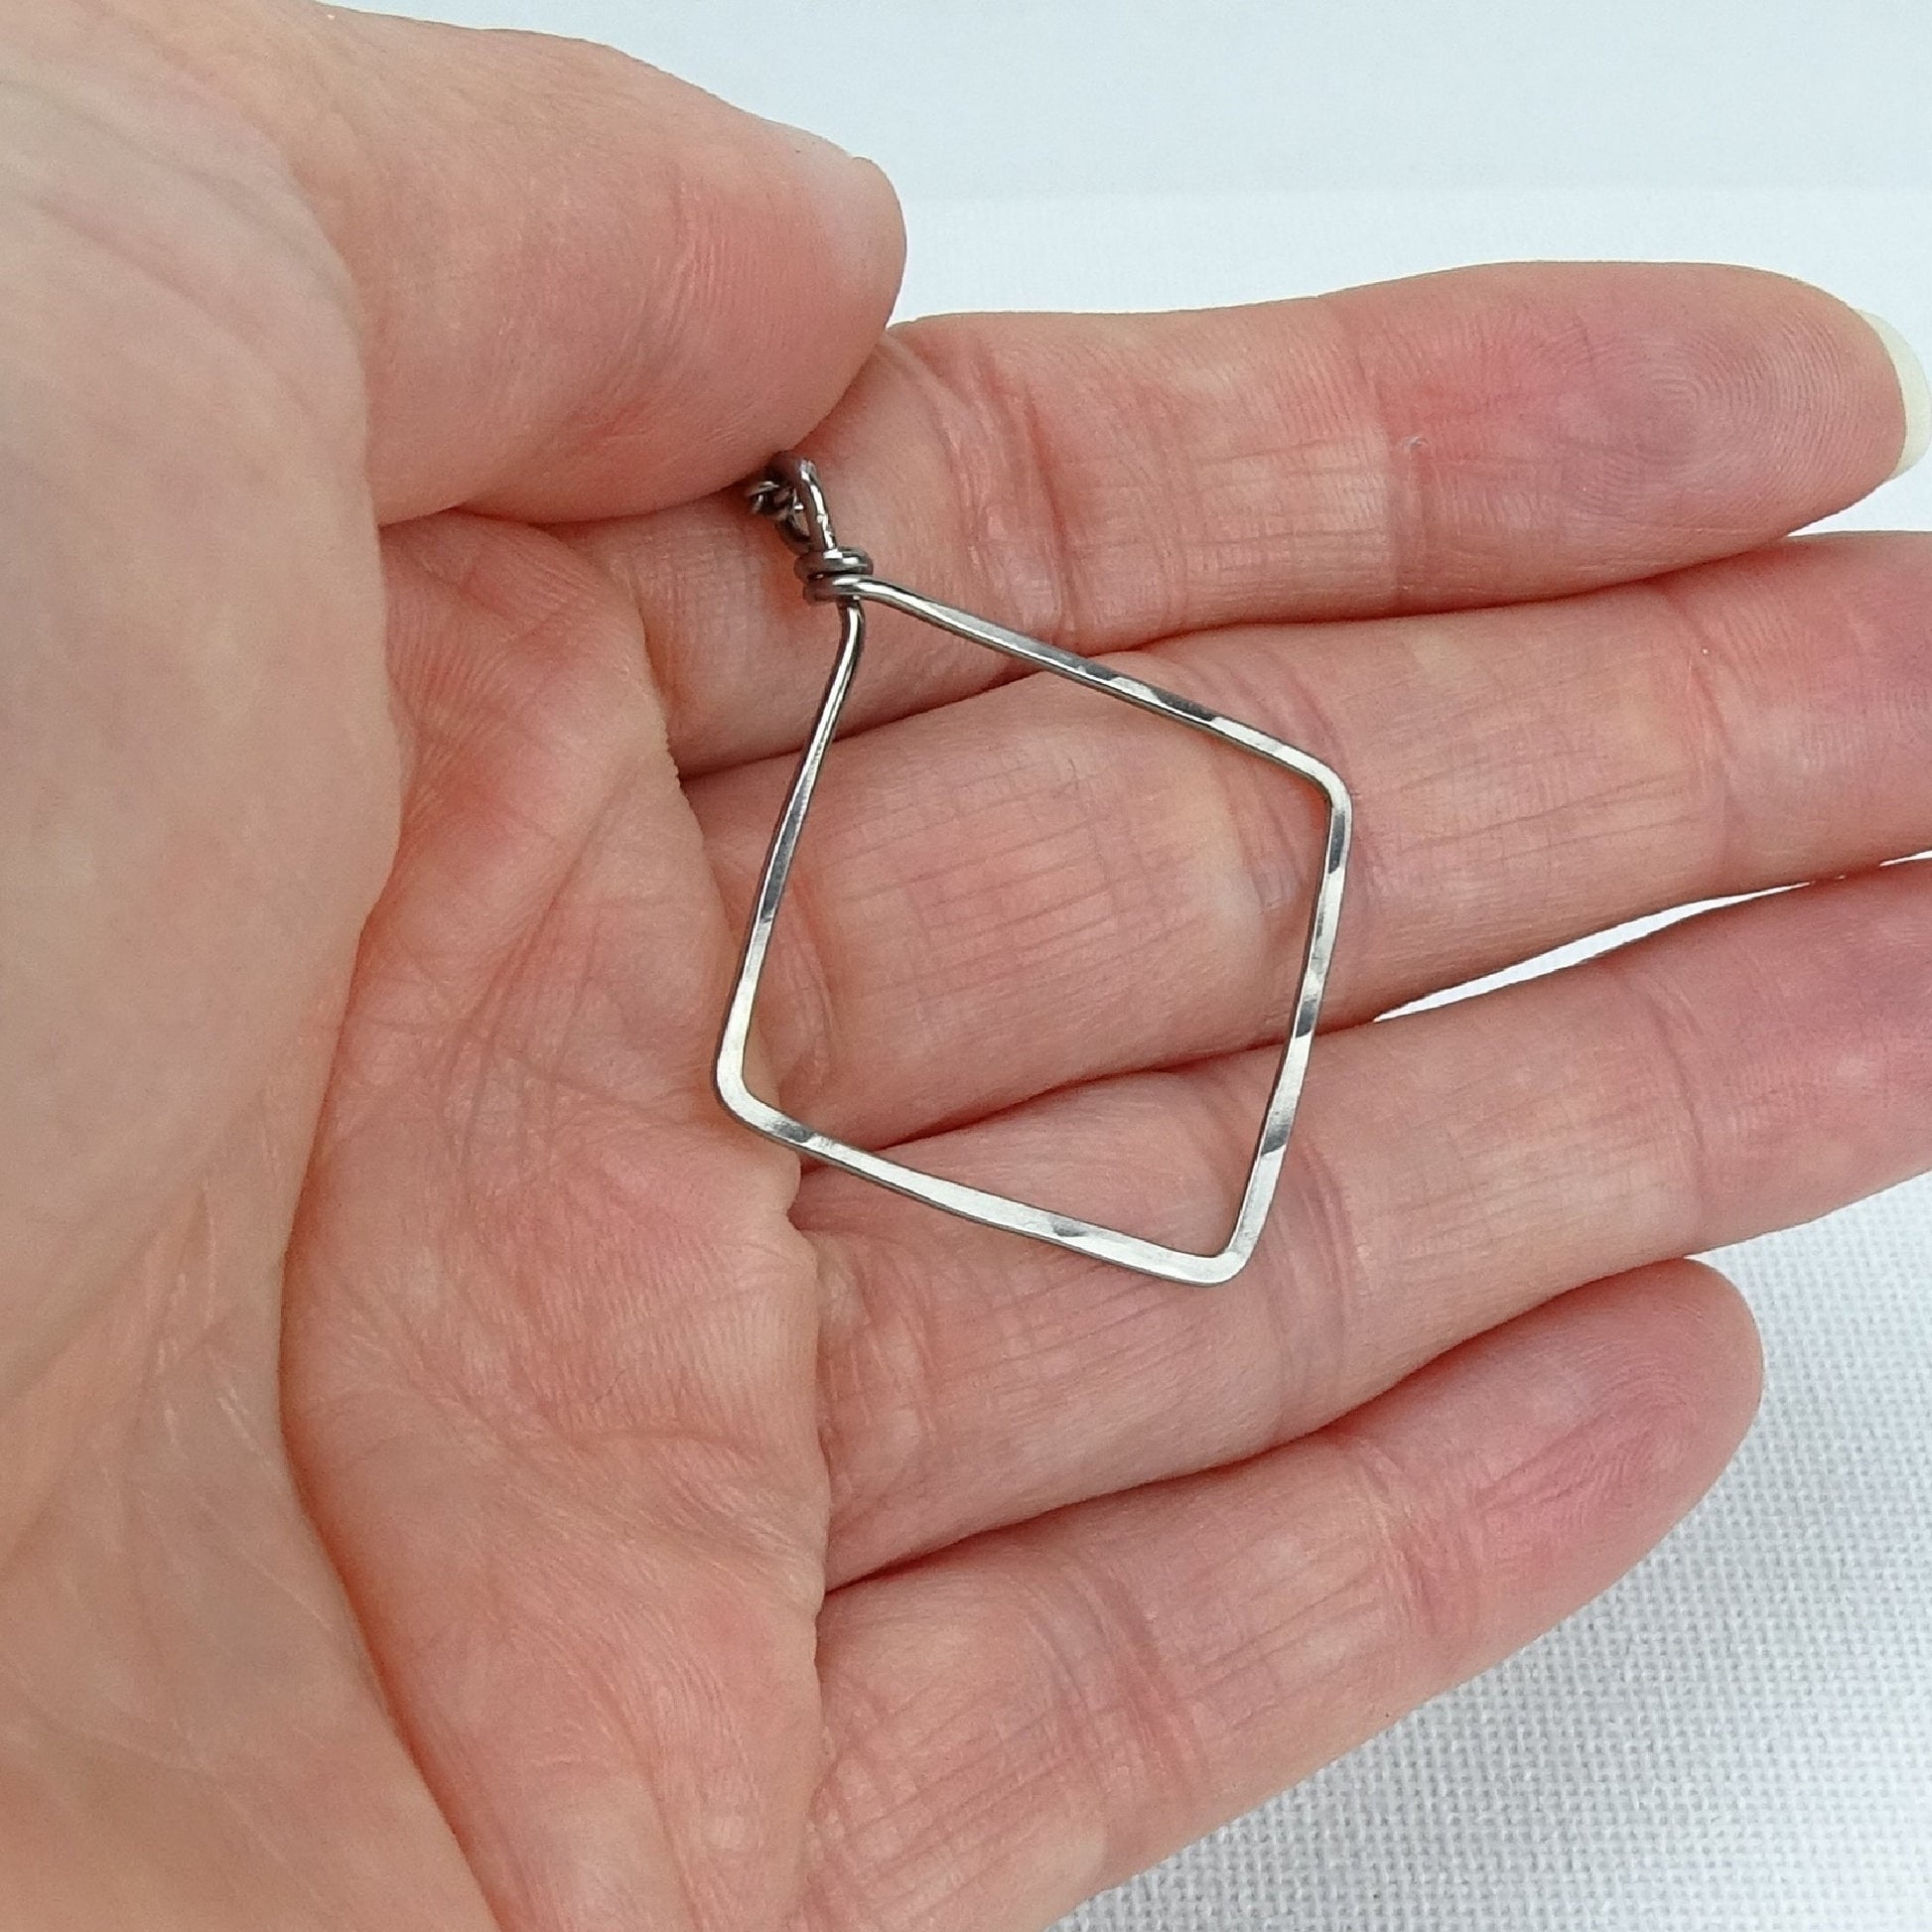 Diamond Square Hoop Titanium Necklace, Hammered Geometric Niobium Pendant, Hypoallergenic Nickel Free Necklace for Sensitive Skin